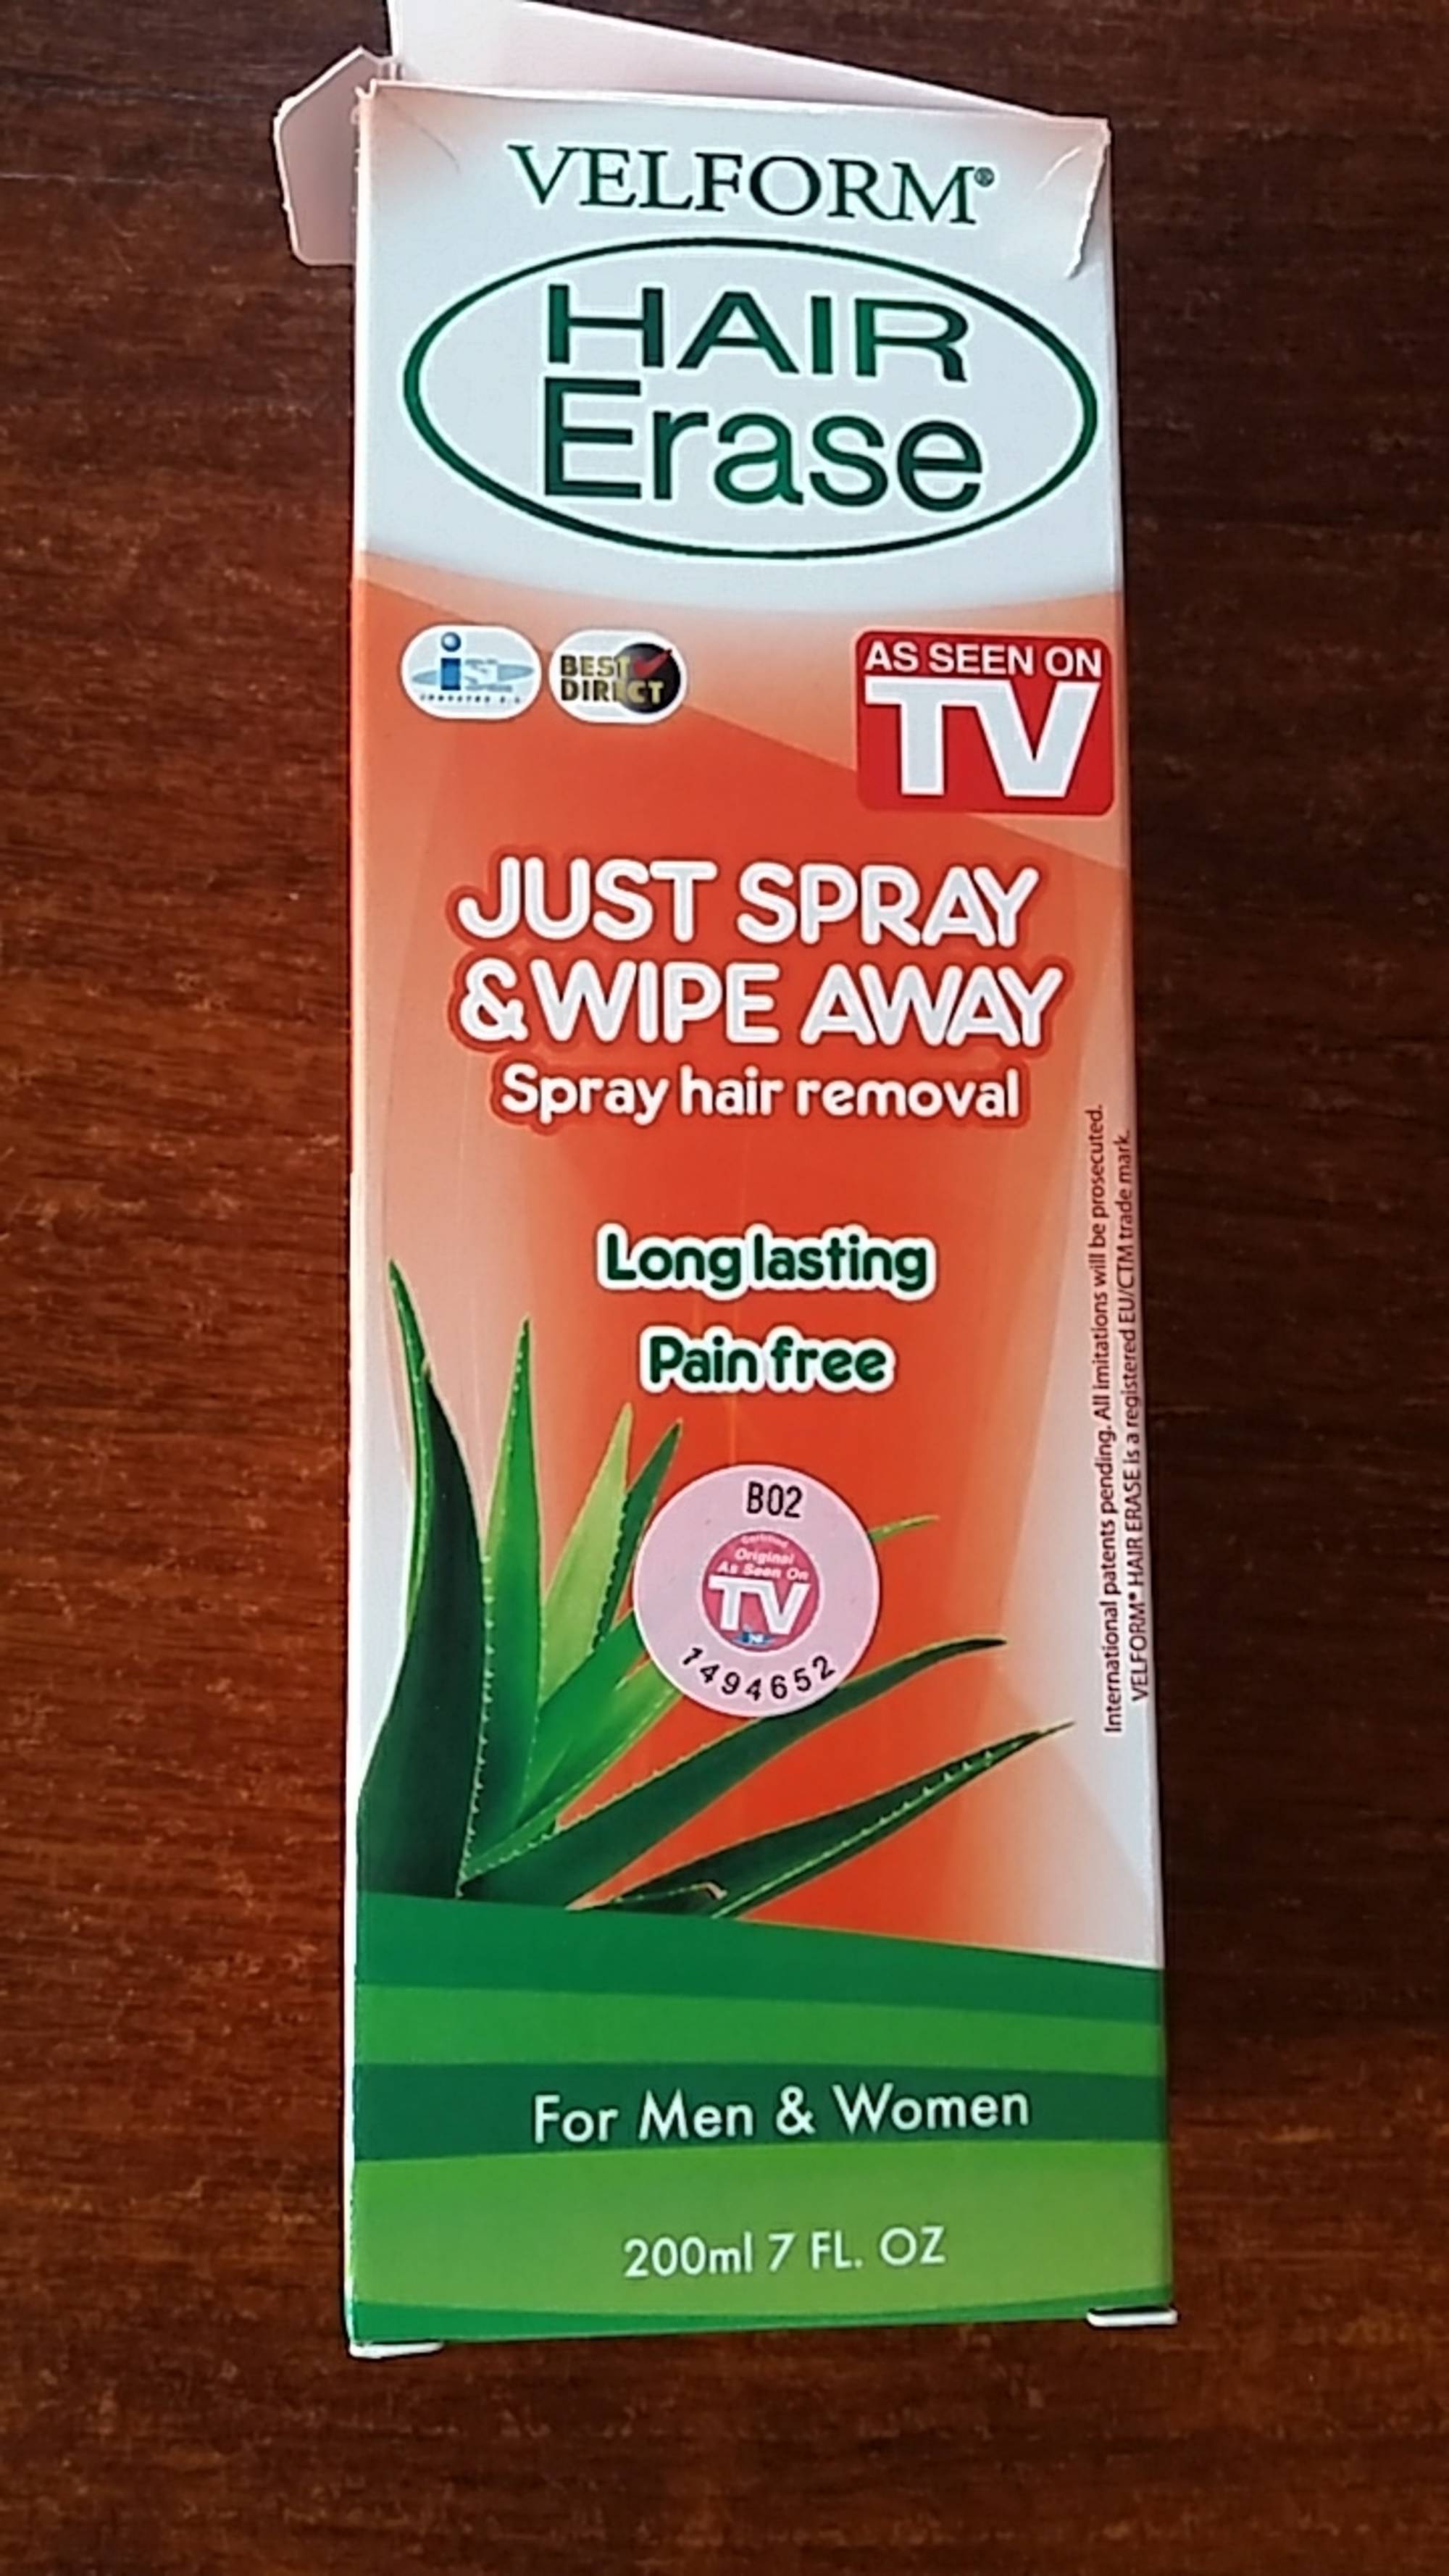 VELFORM - Hair erase - Just spray & wipe away for men and women